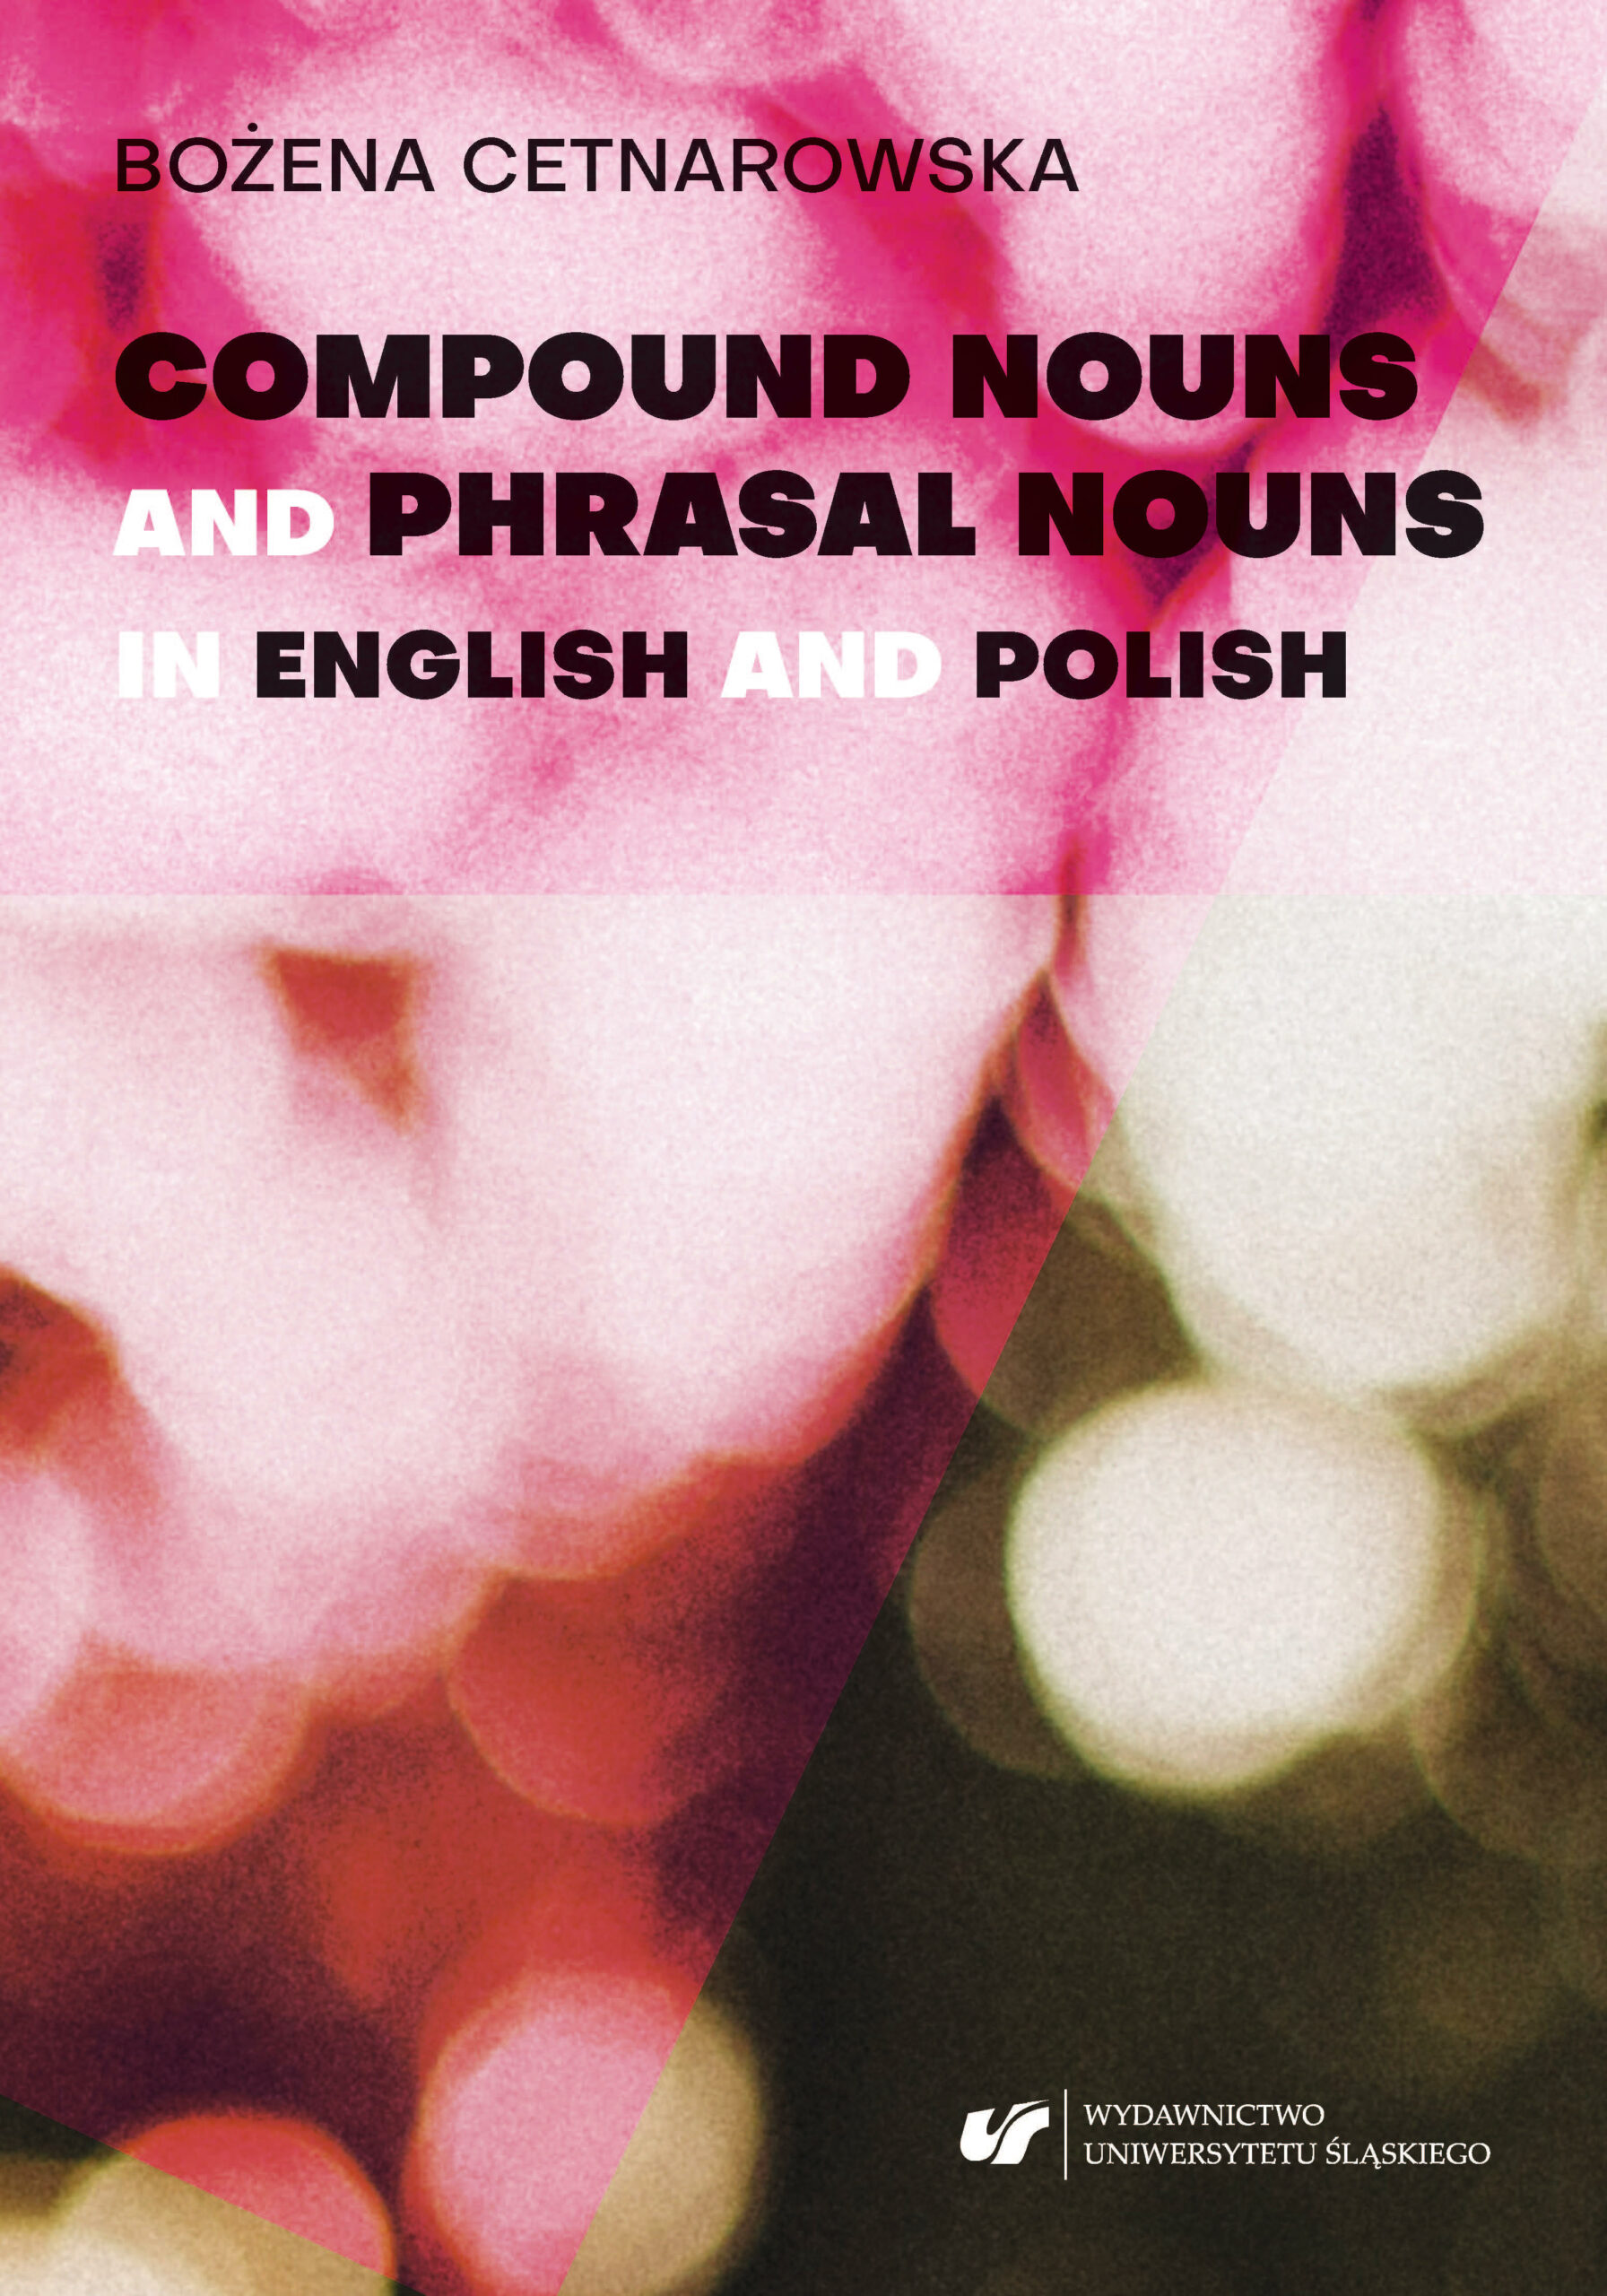 Bożena Cetnarowska Compound Nouns and Phrasal Nouns in English and Polish